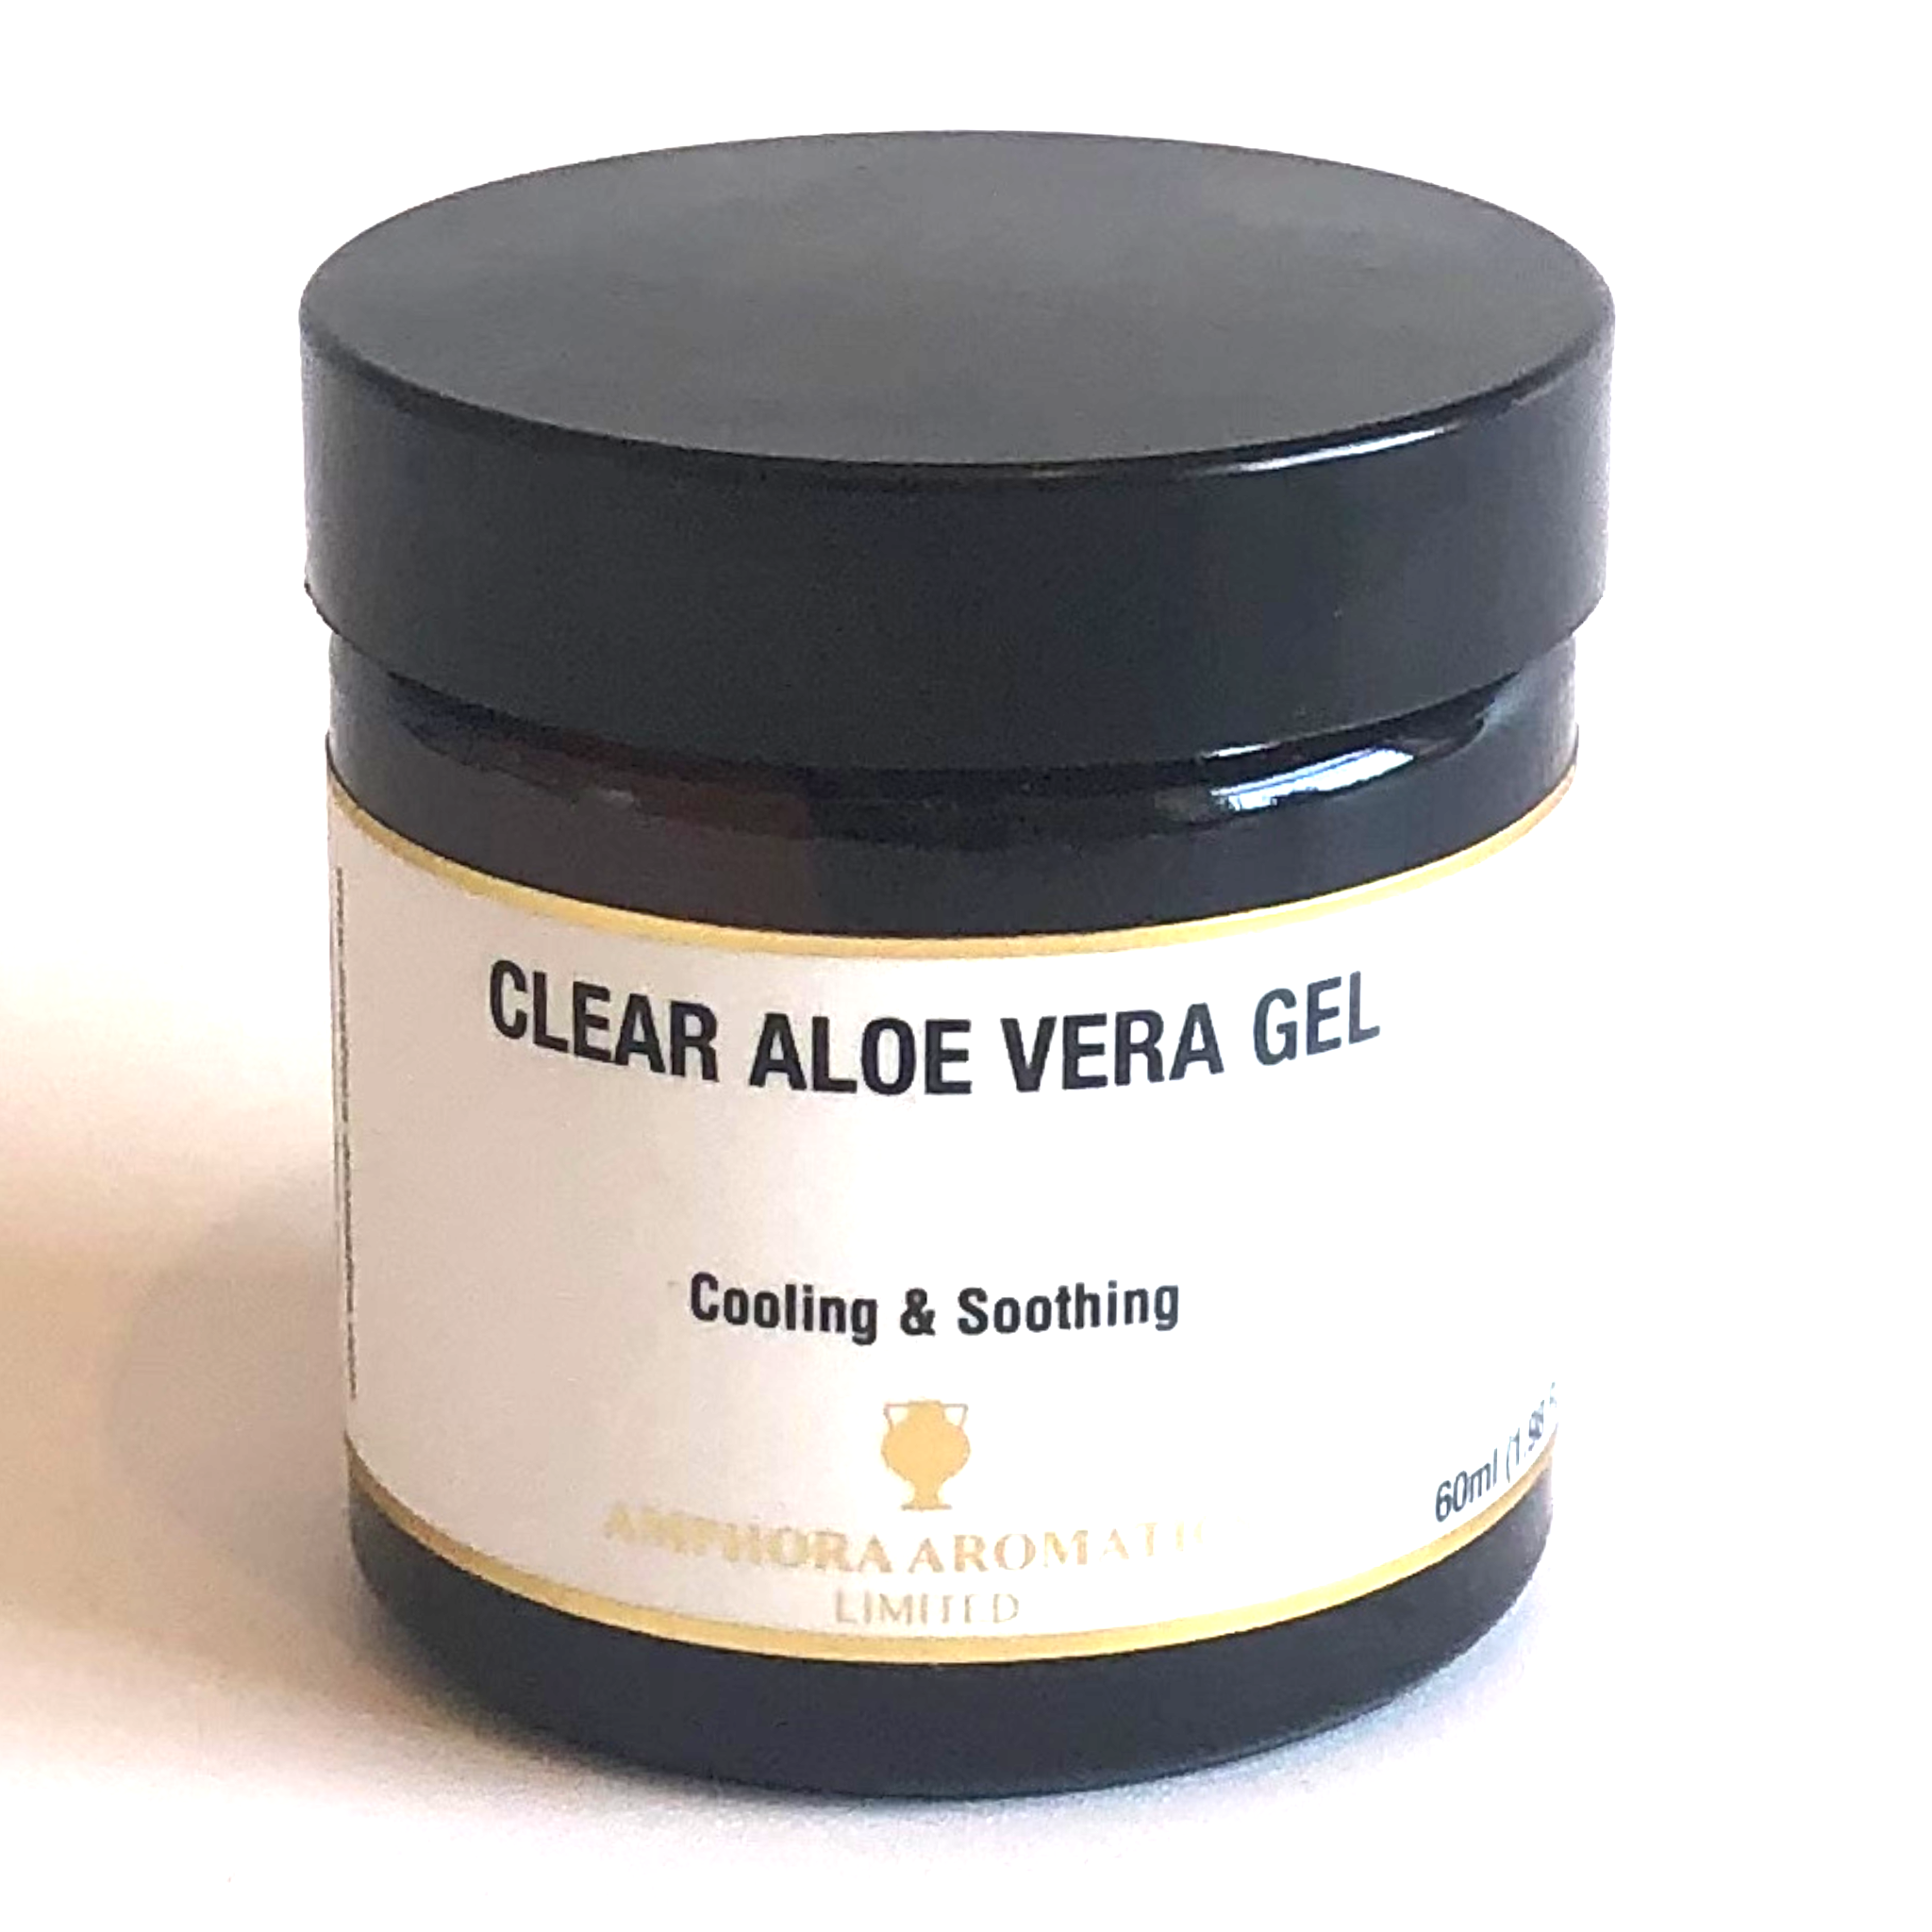 Clear Aloe Vera Gel by Amphora Aromatics